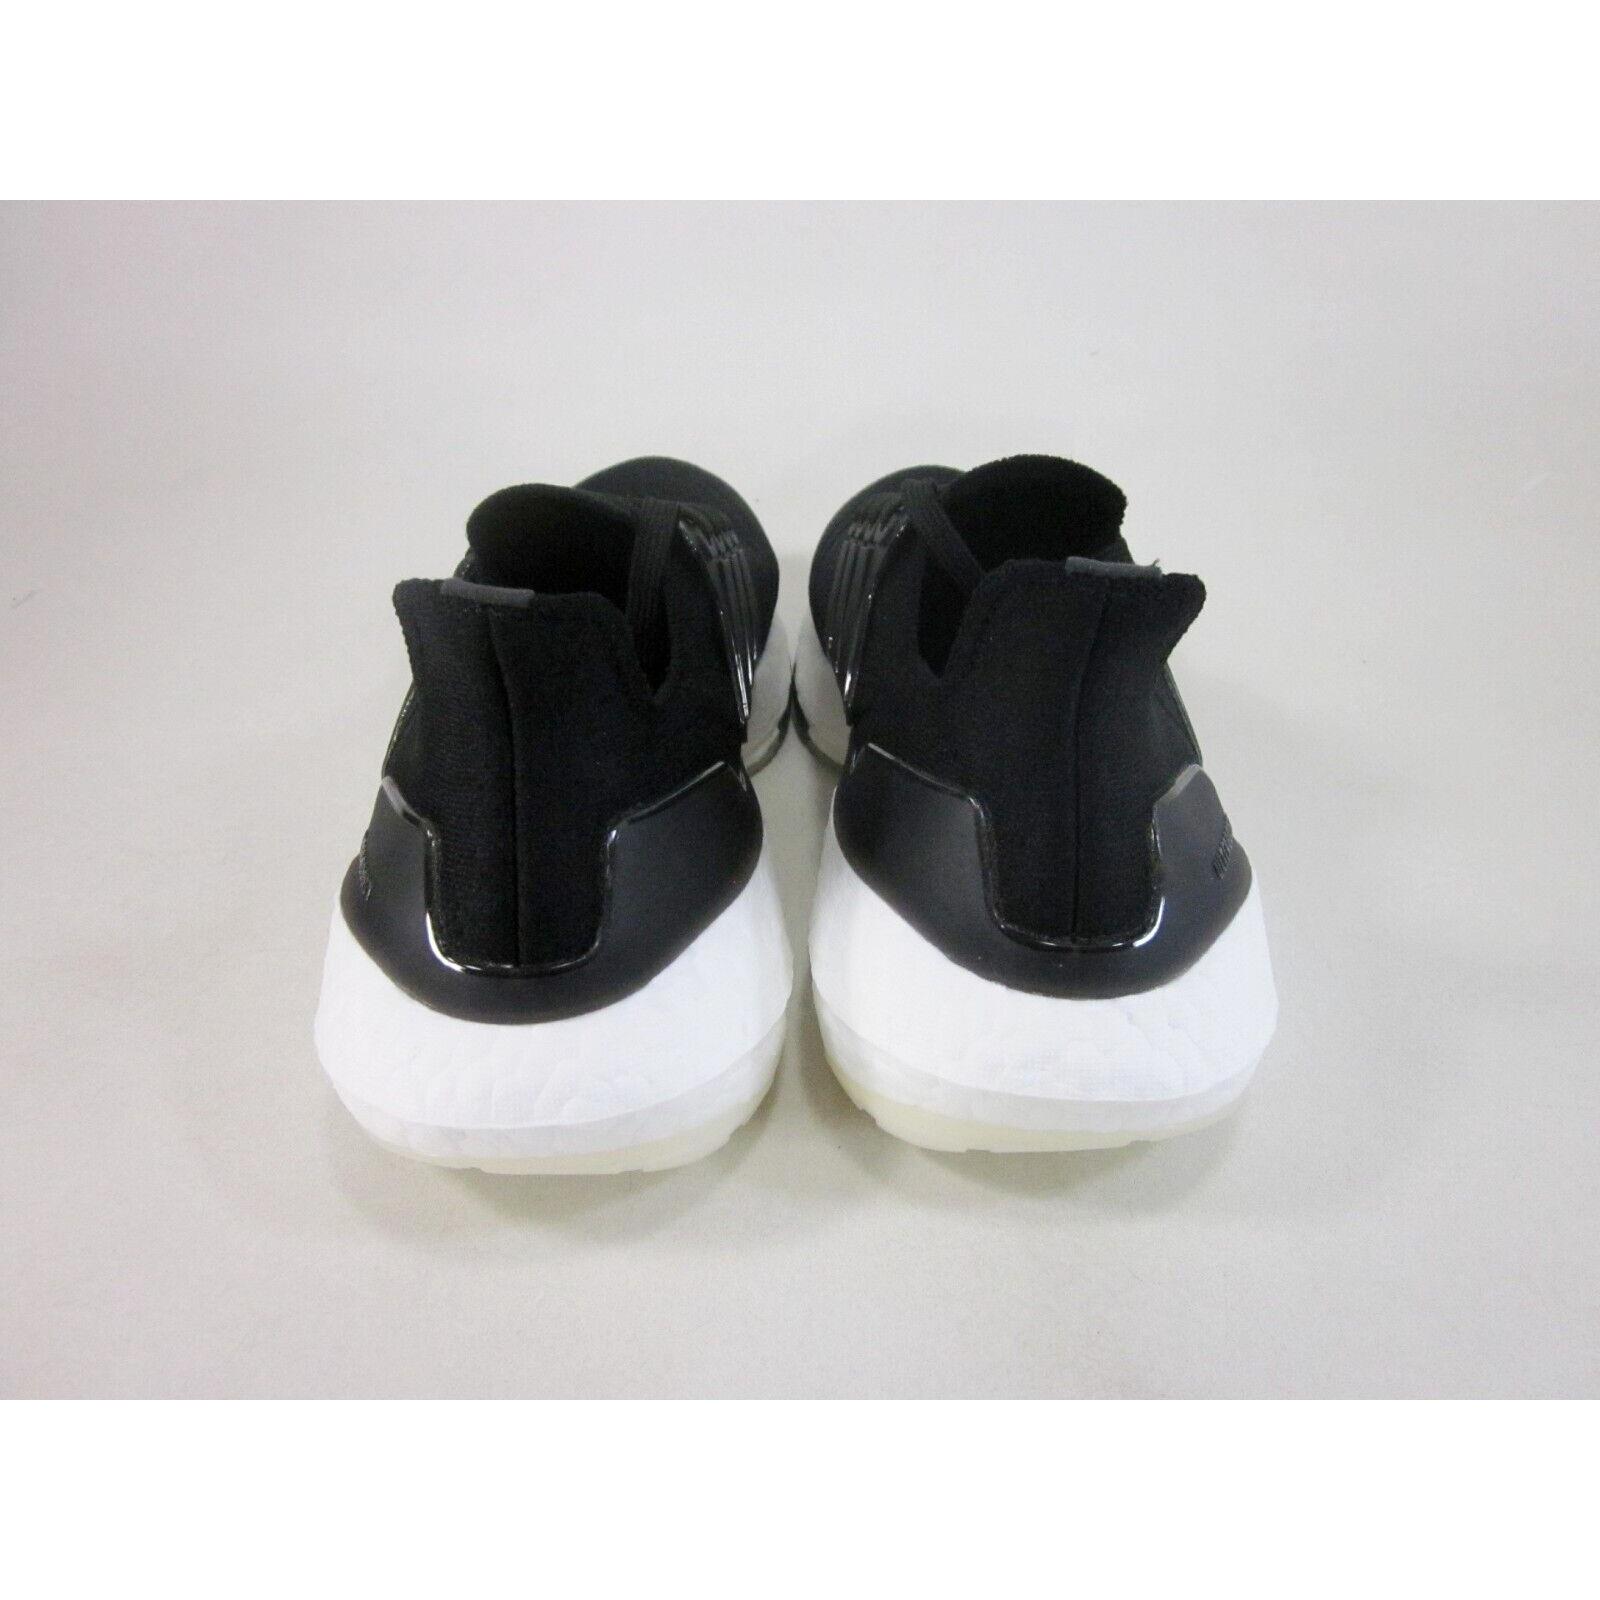 Adidas shoes Ultraboost - Black/Grey/White 3